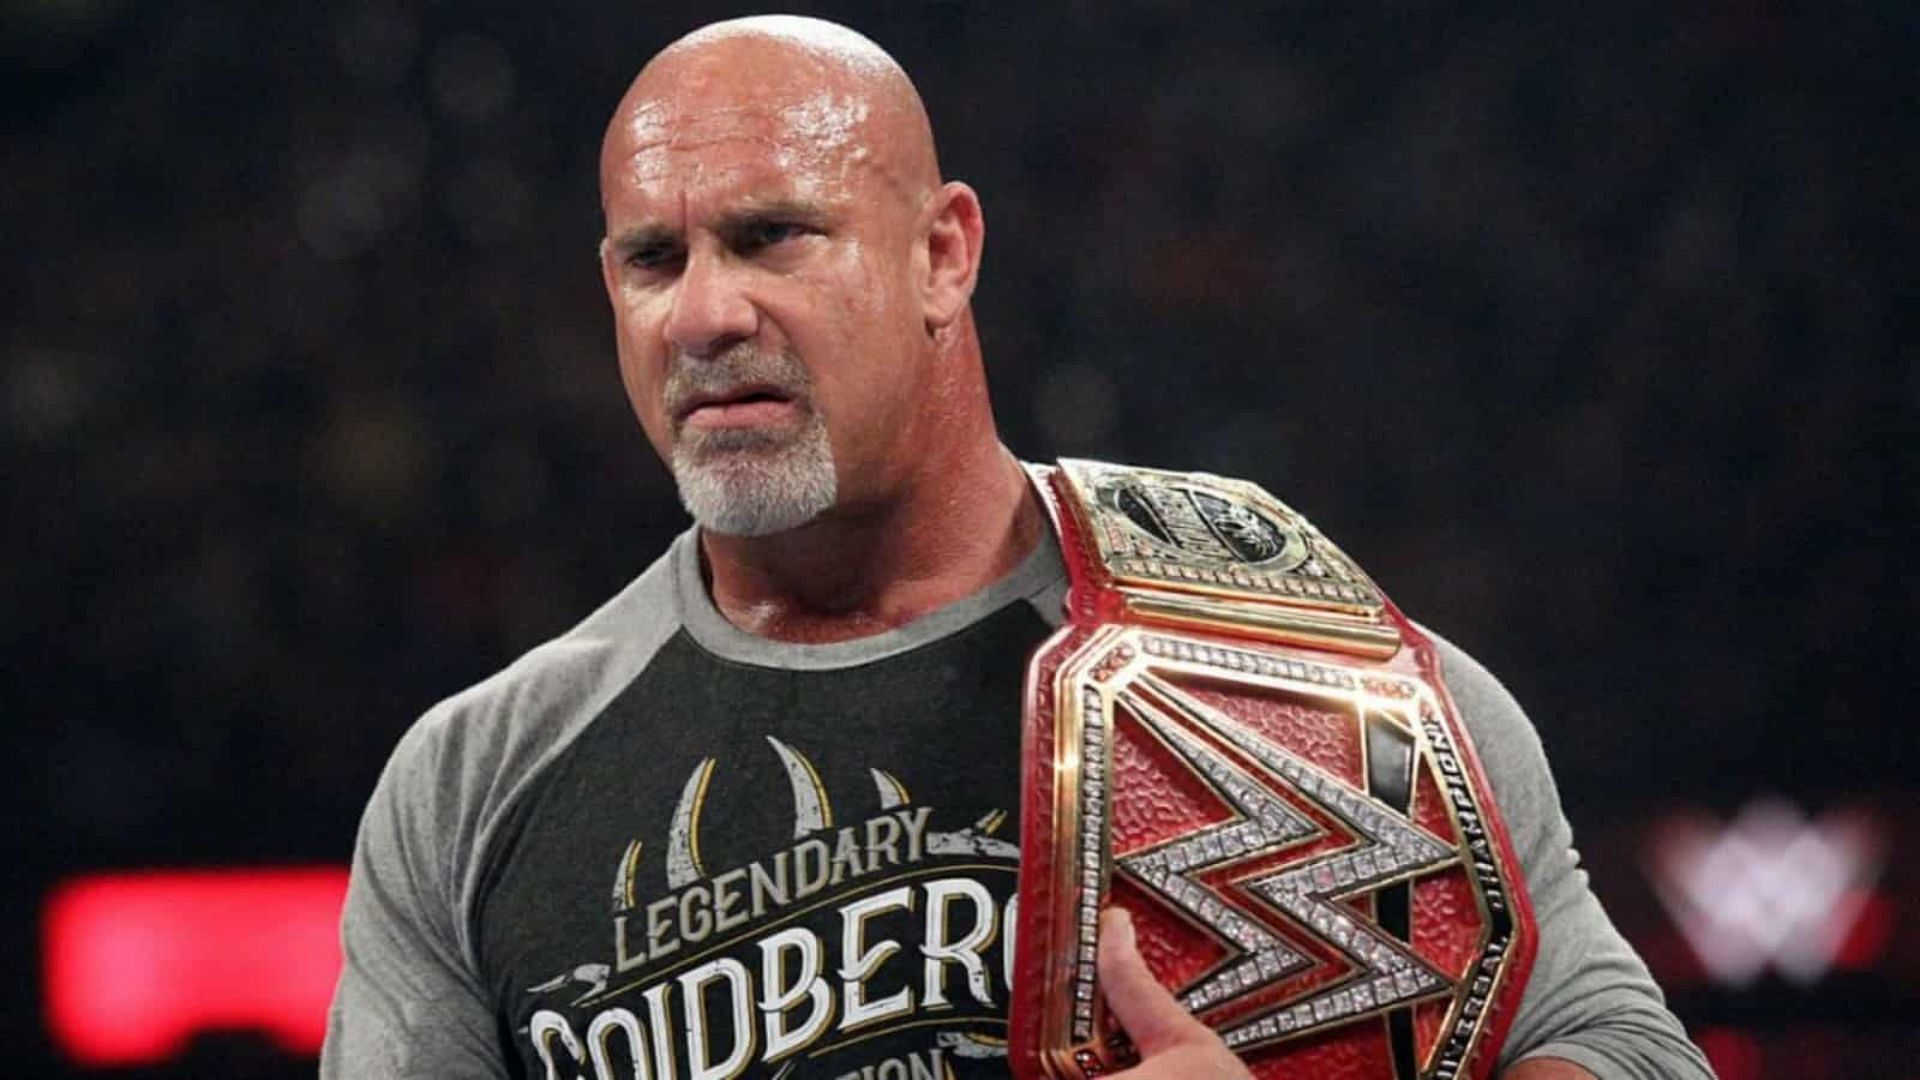 Goldberg is a two-time WWE Universal Champion